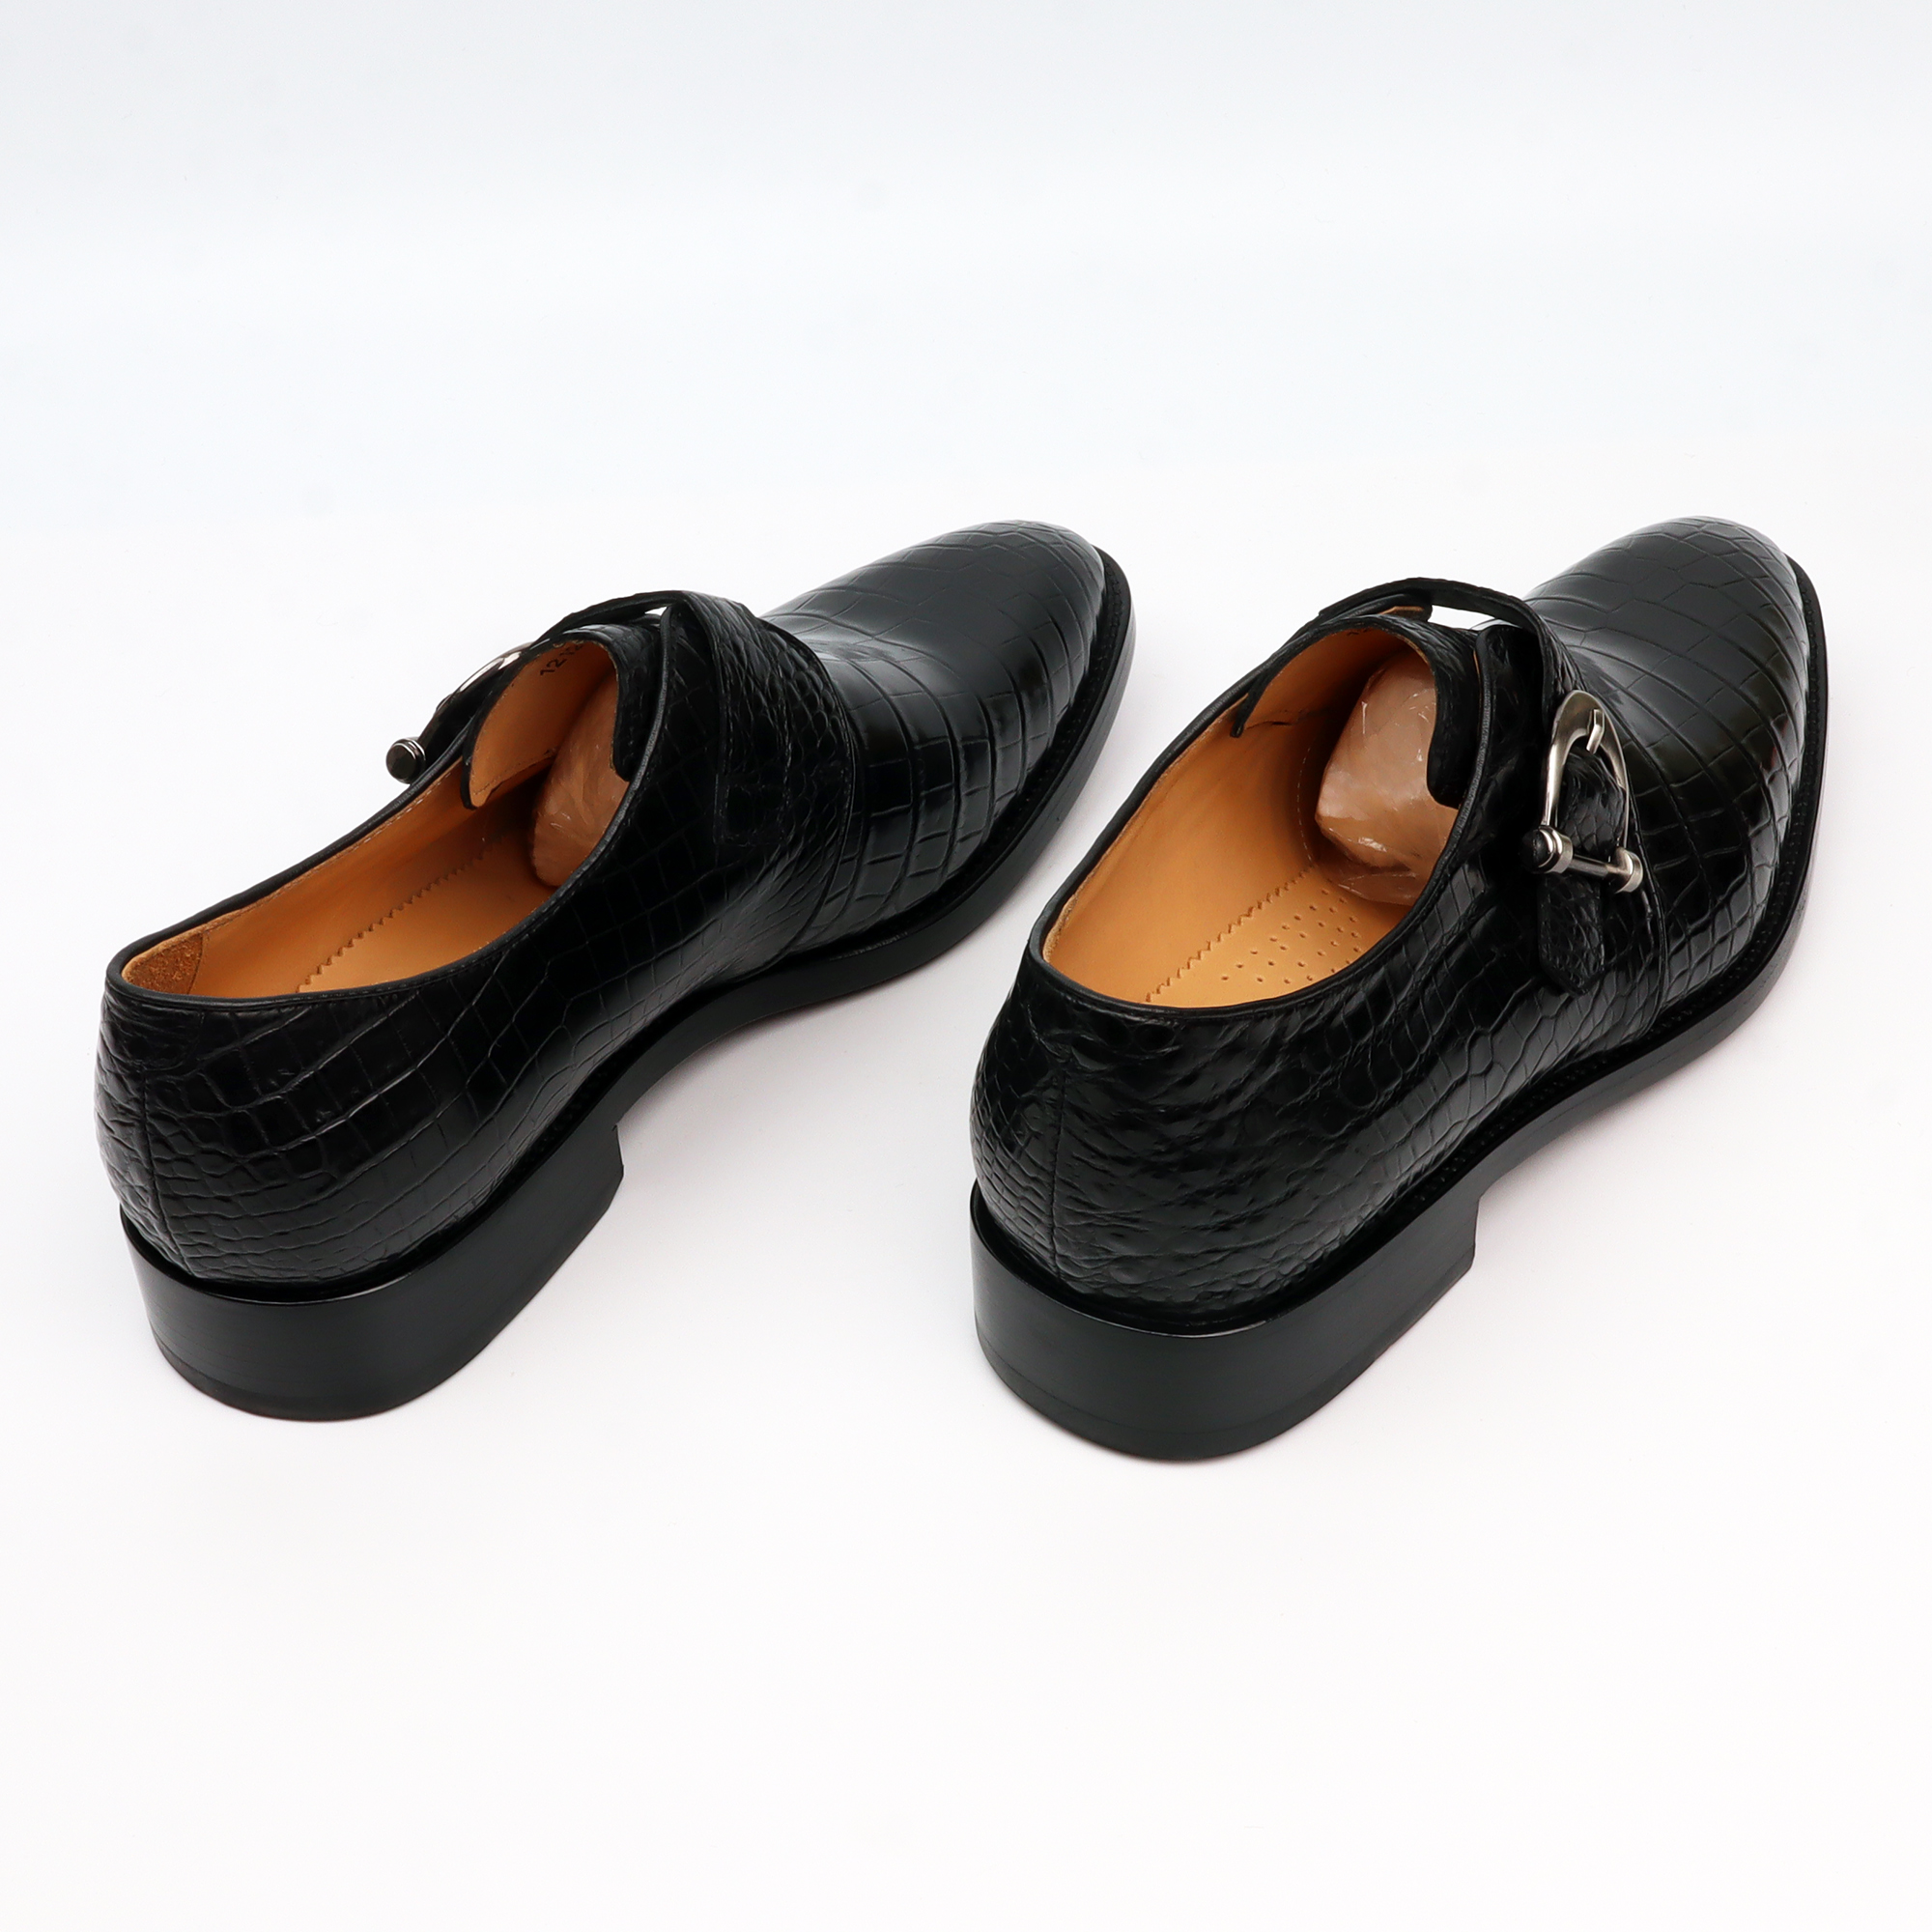 Men's Black Single Monk Strap Dress Shoes Oxford Formal Business Shoes